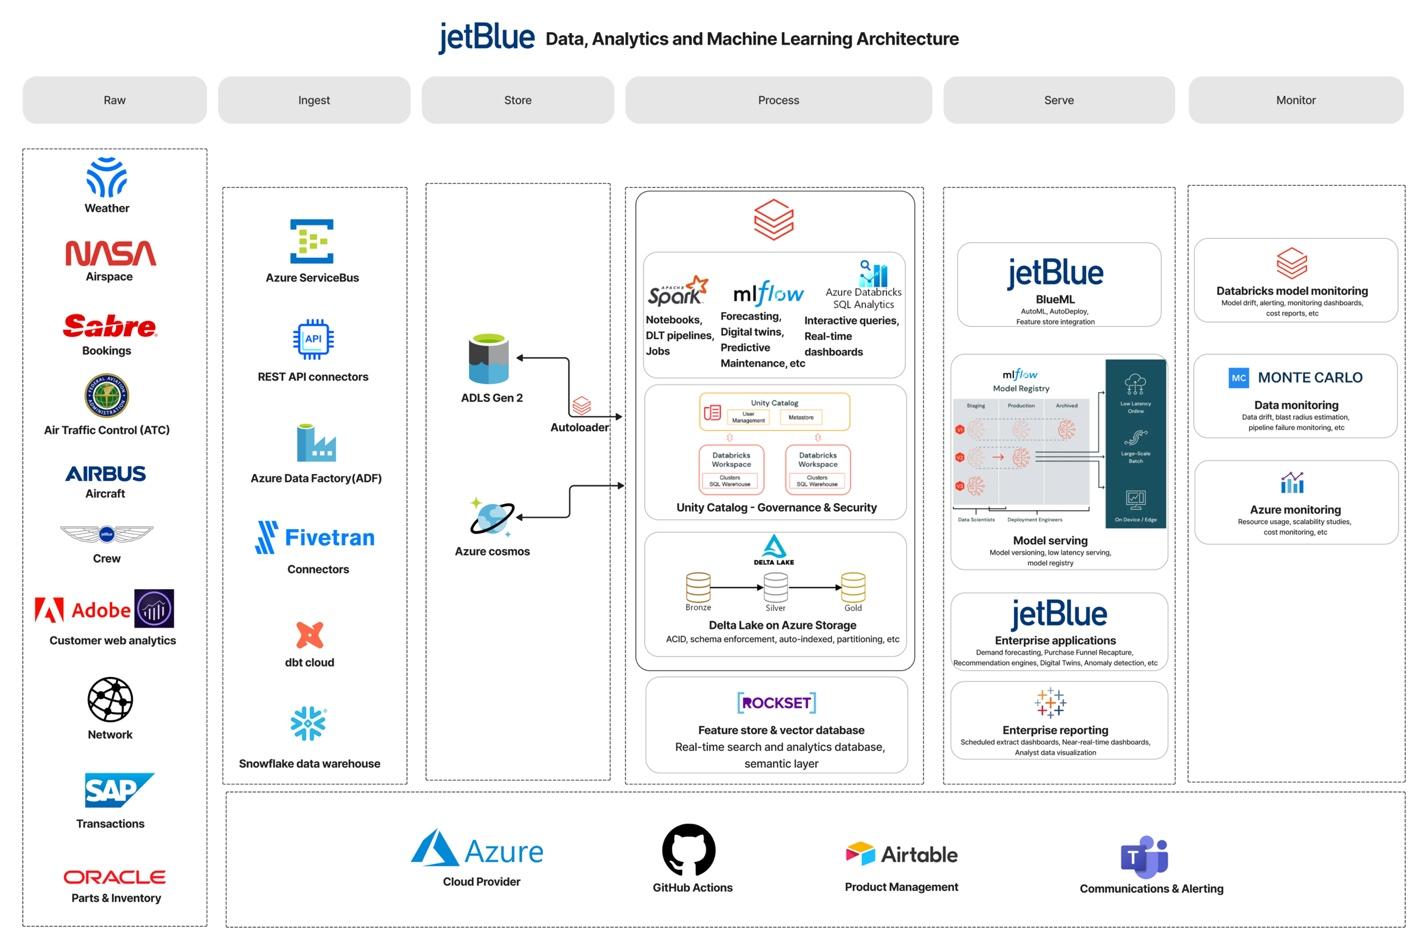 JetBlue data, analytics and machine learning architecture